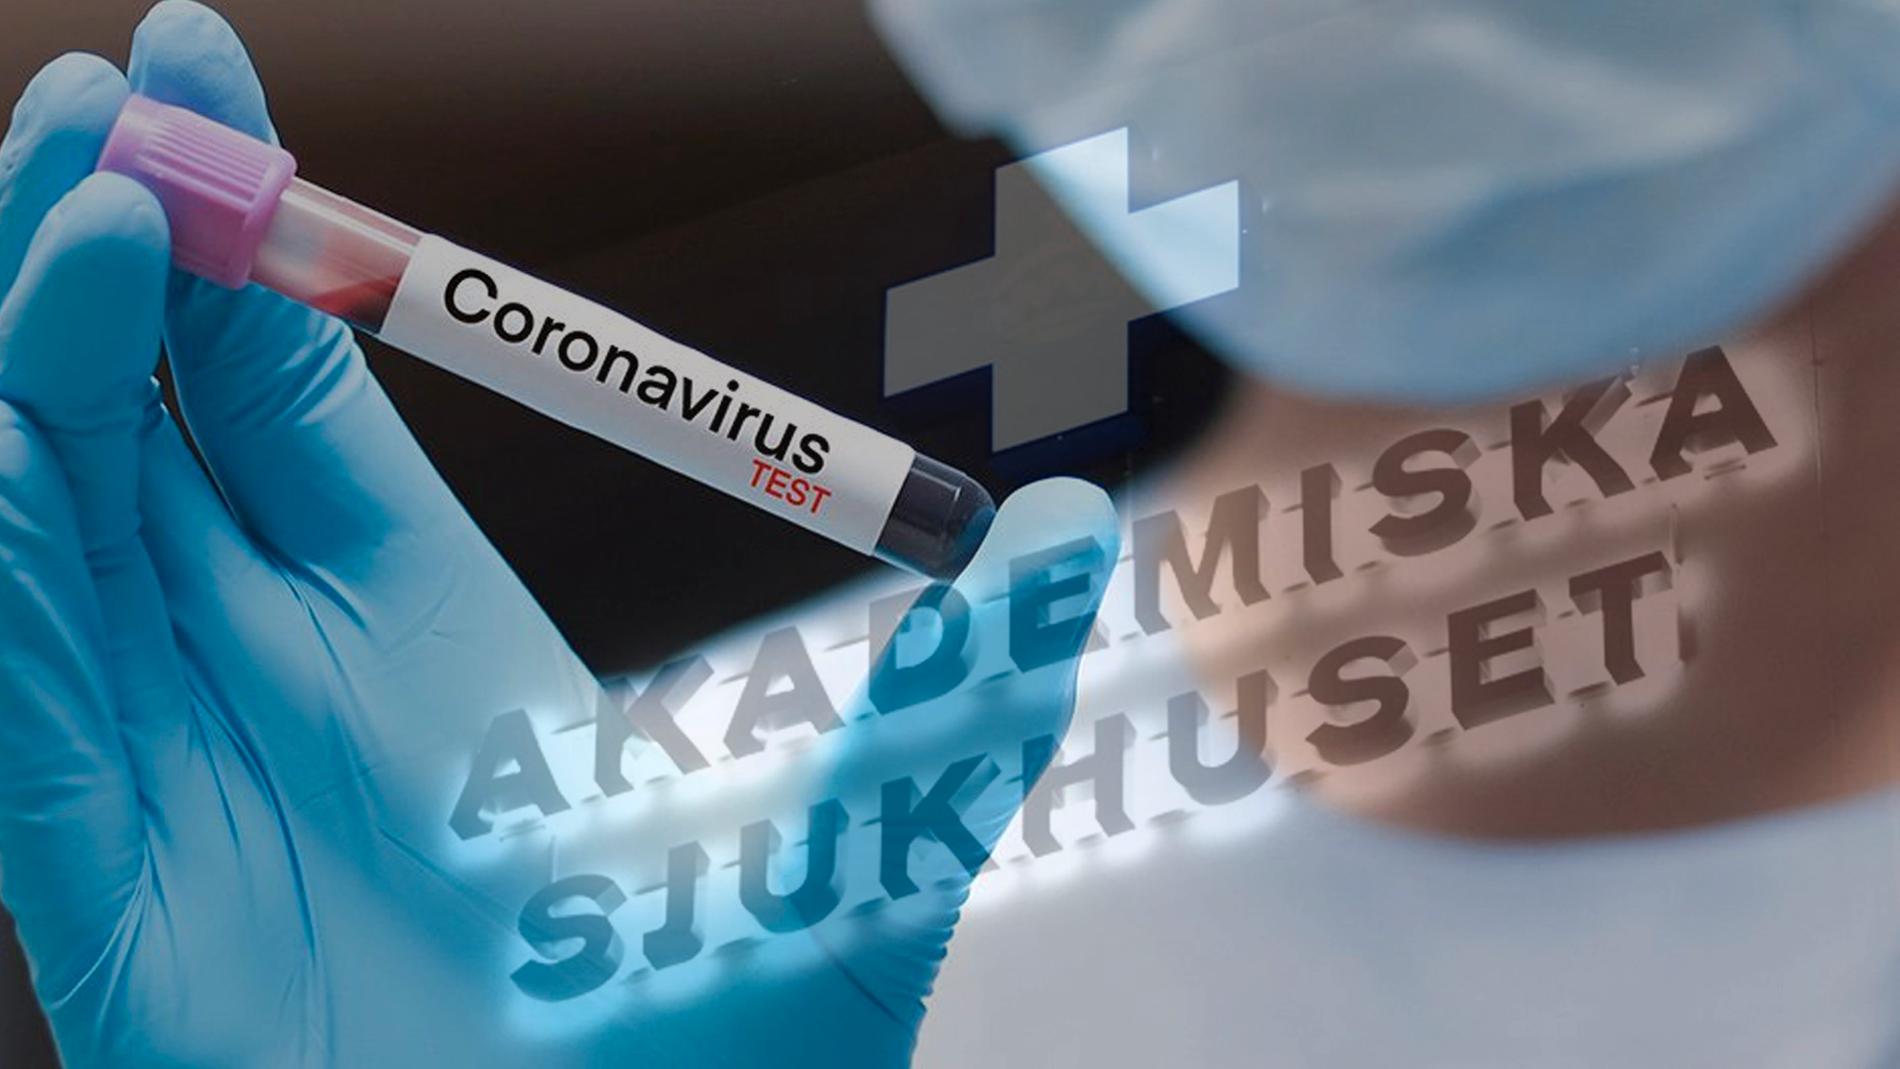 Akademiska sjukhuset kan nu själva analysera prover på misstänkta coronasmittade.